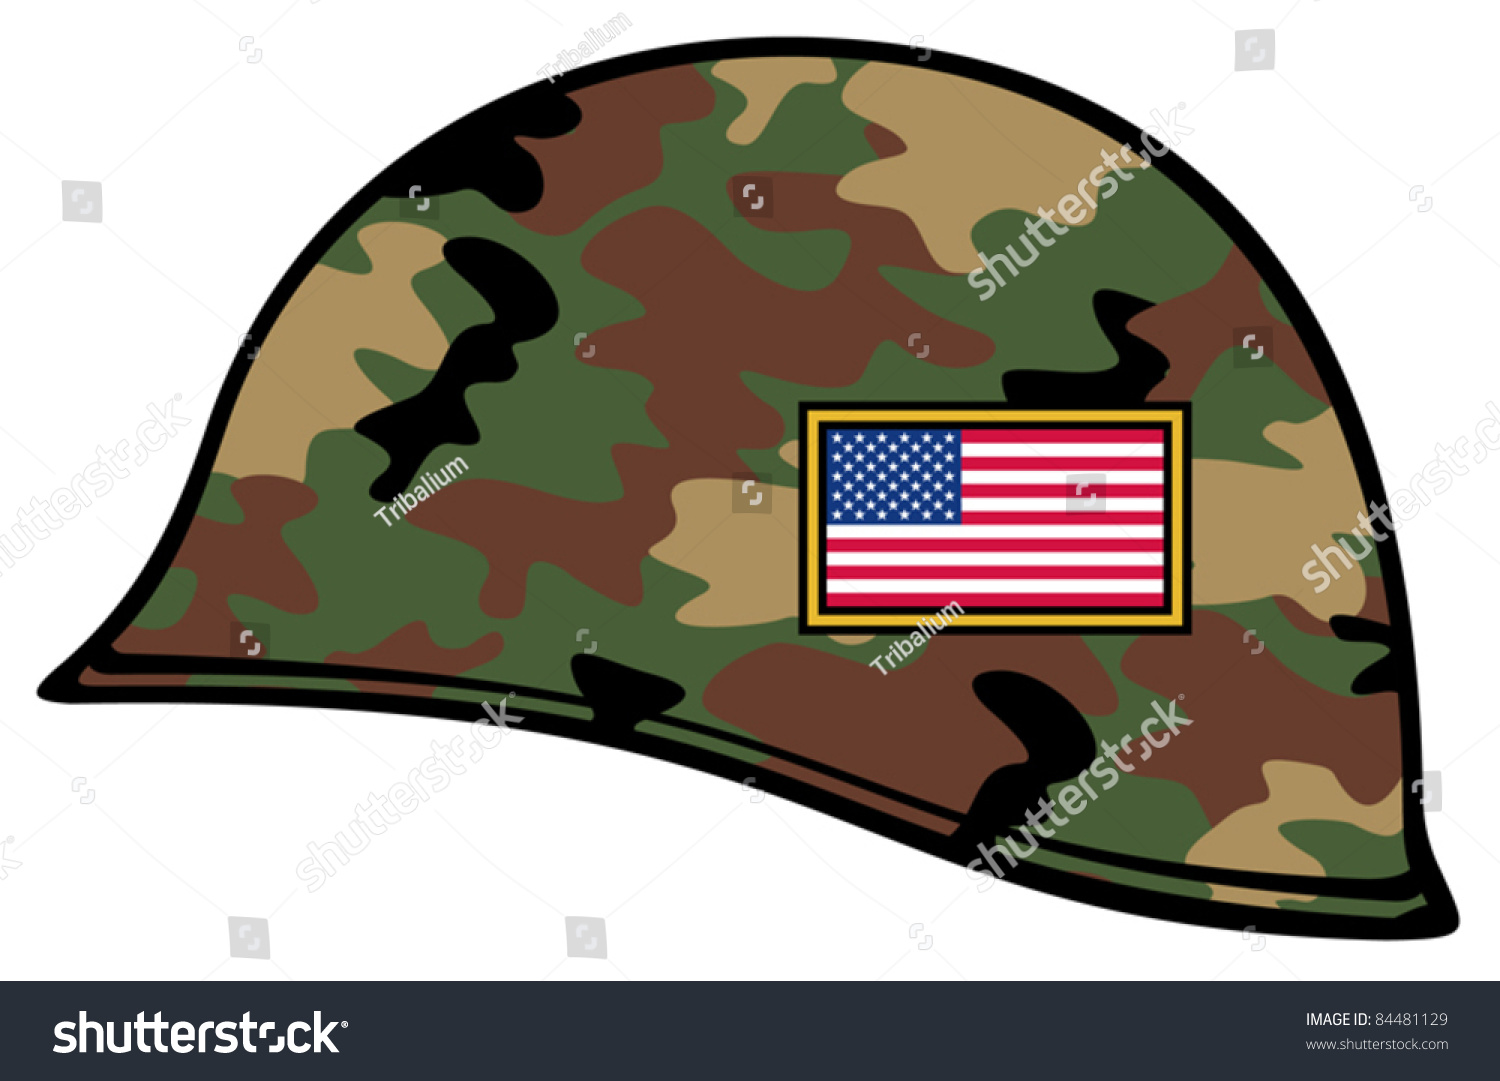 military flag clip art - photo #36